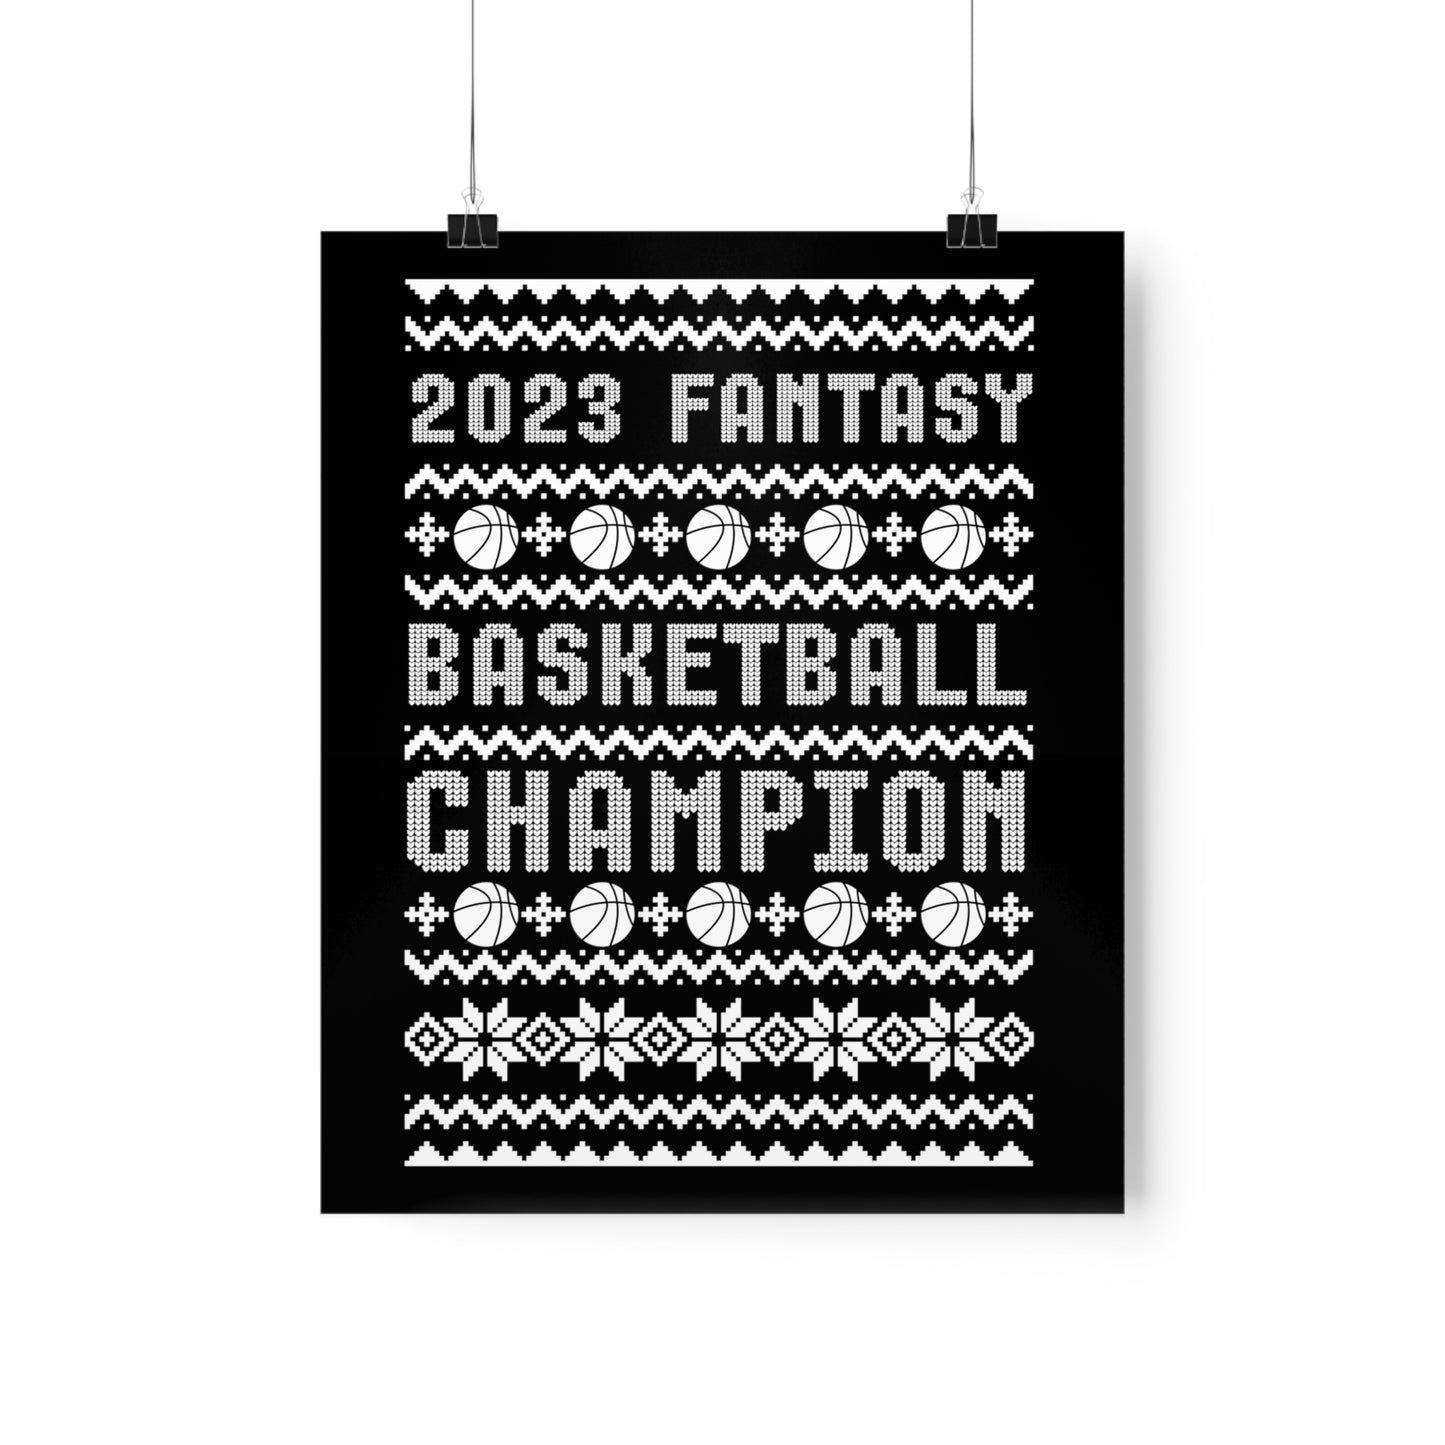 2023 Fantasy Basketball Champion Ugly Holiday Christmas Champ Premium Matte Poster